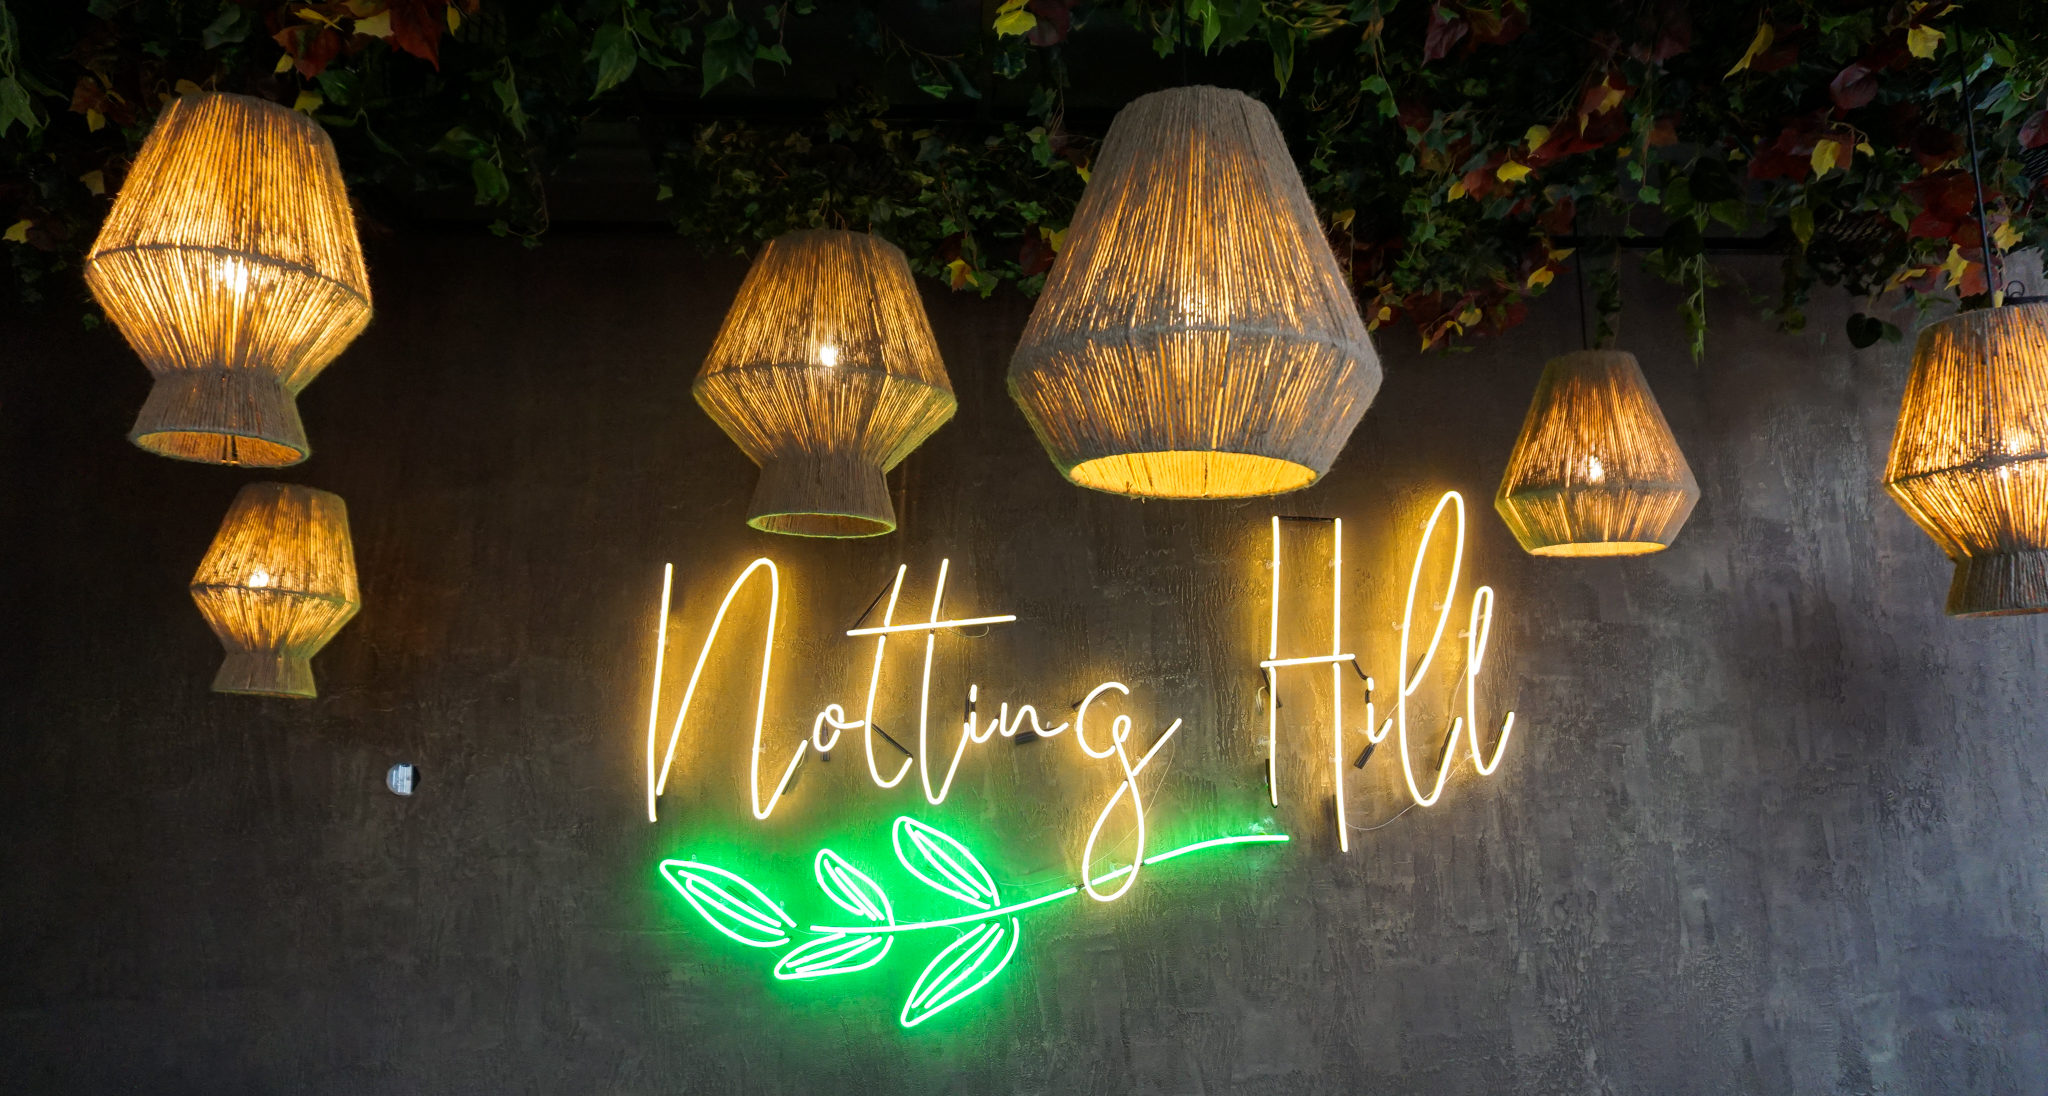 Wir sind Theresie – Teil 13: Notting Hill Café